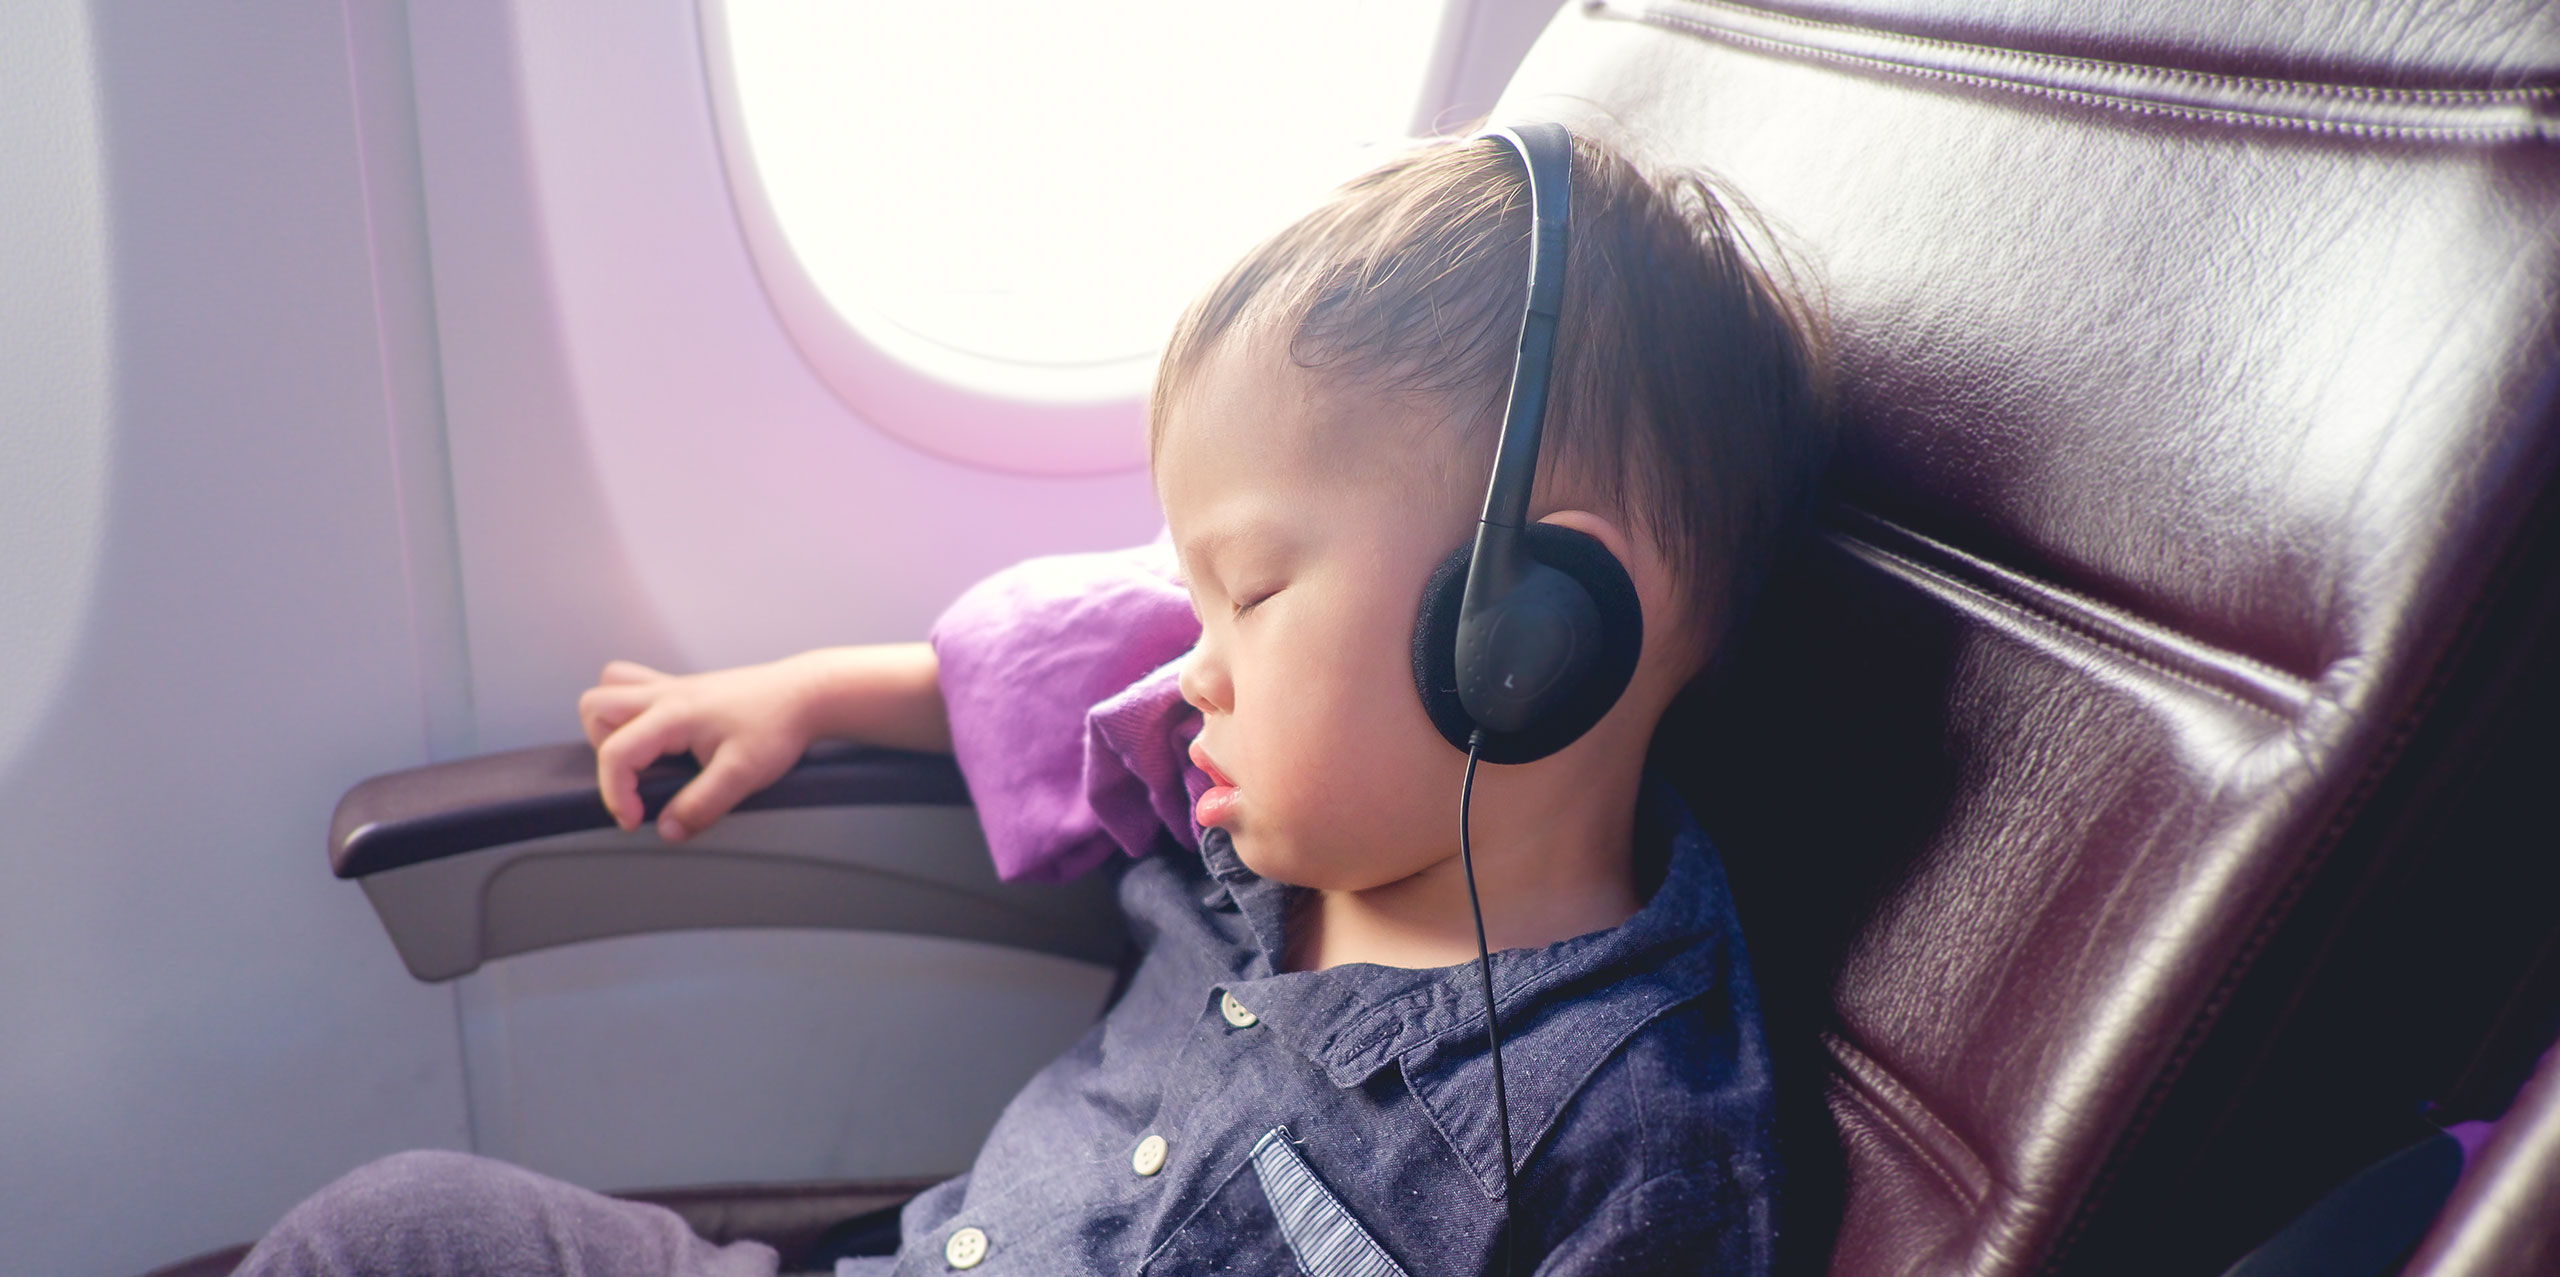 Asian Toddler Wearing Headphones on Plane; Courtesy of Yaoinlove/Shutterstock.com